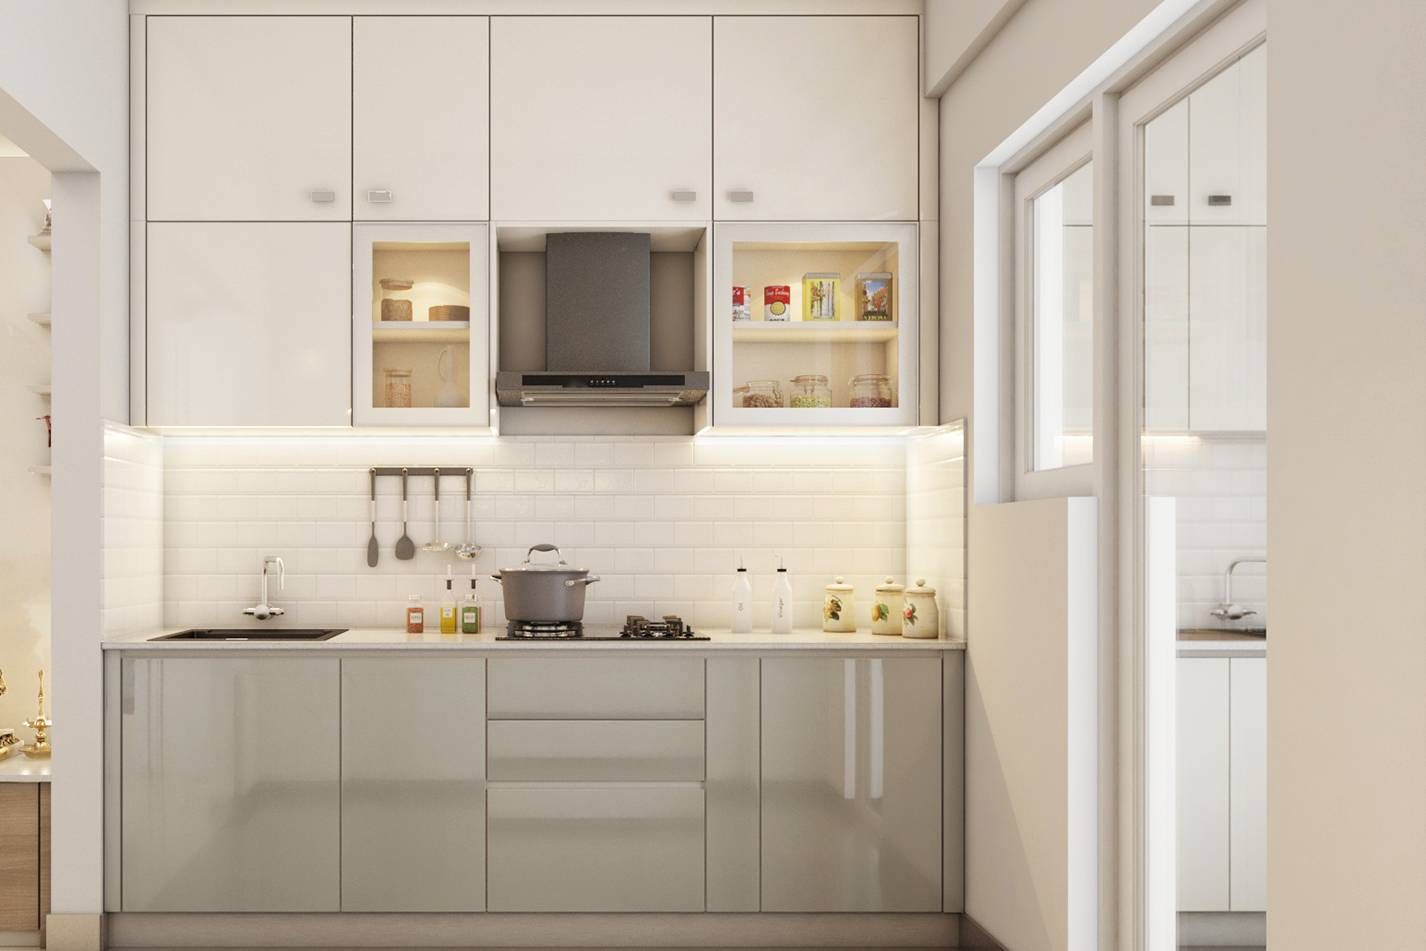 Modern Parallel Modular Kitchen Design In White And Grey